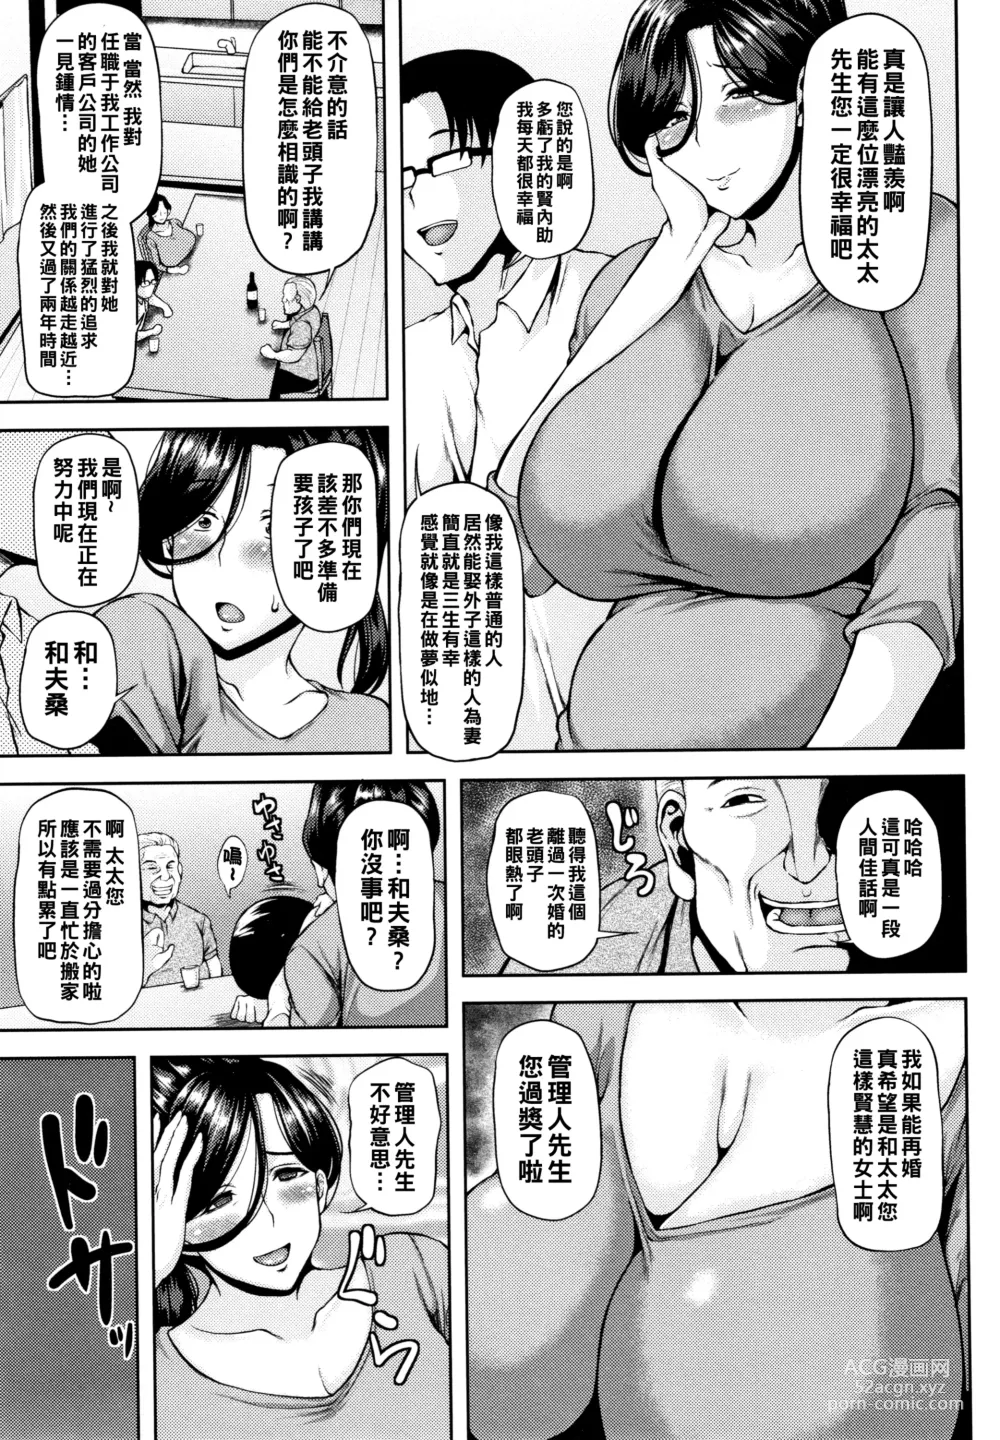 Page 192 of manga Shinen Immoral